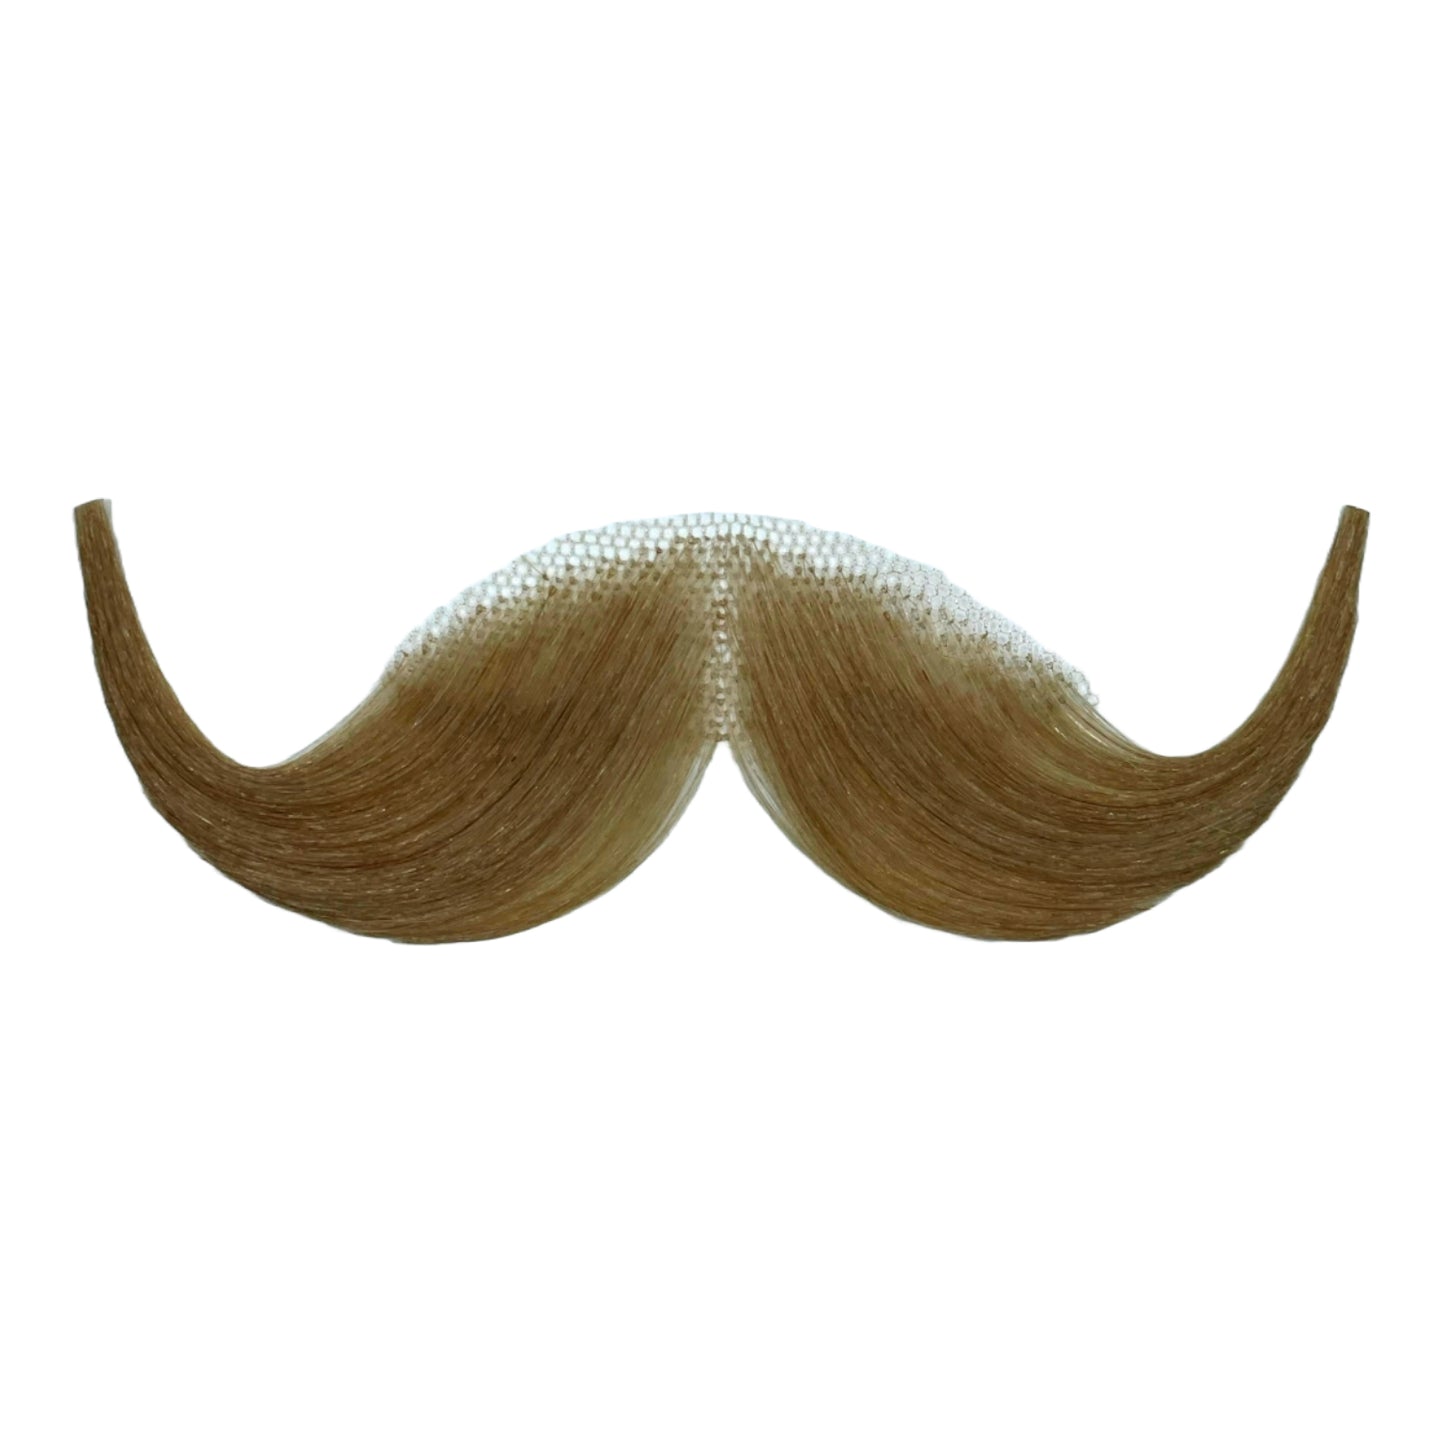 2013 Handlebar Moustache